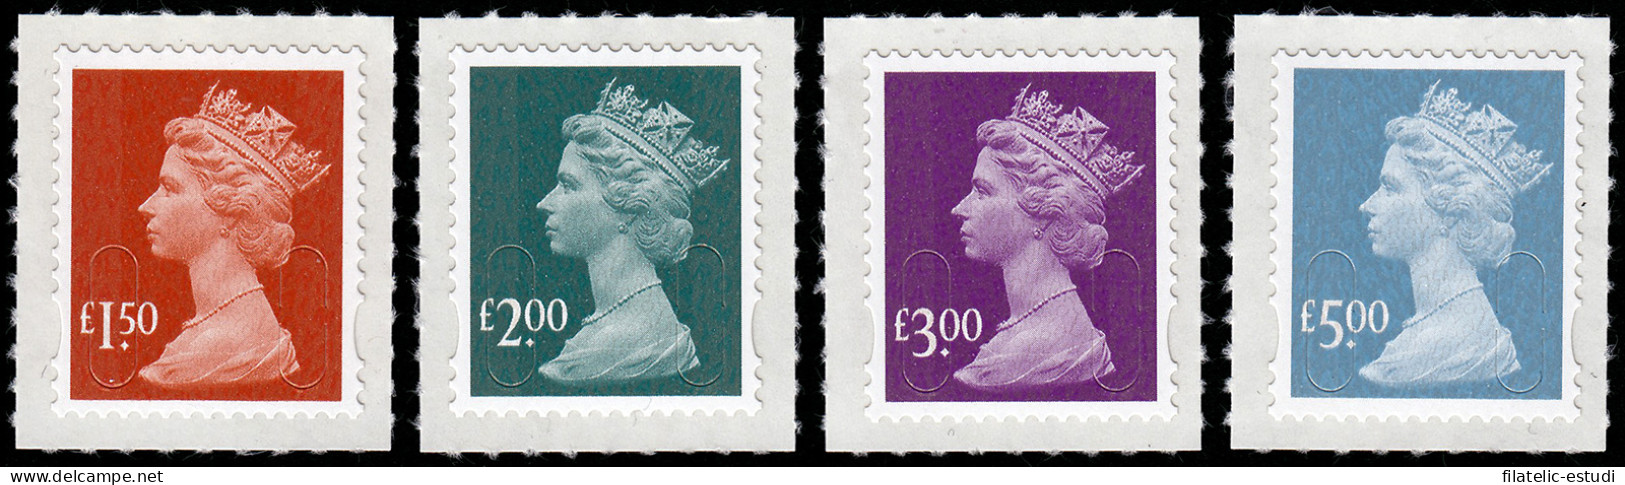 Gran Bretaña 3108/11 2009 Serie Reina Isabel II Autoadhesivos MNH - Unclassified